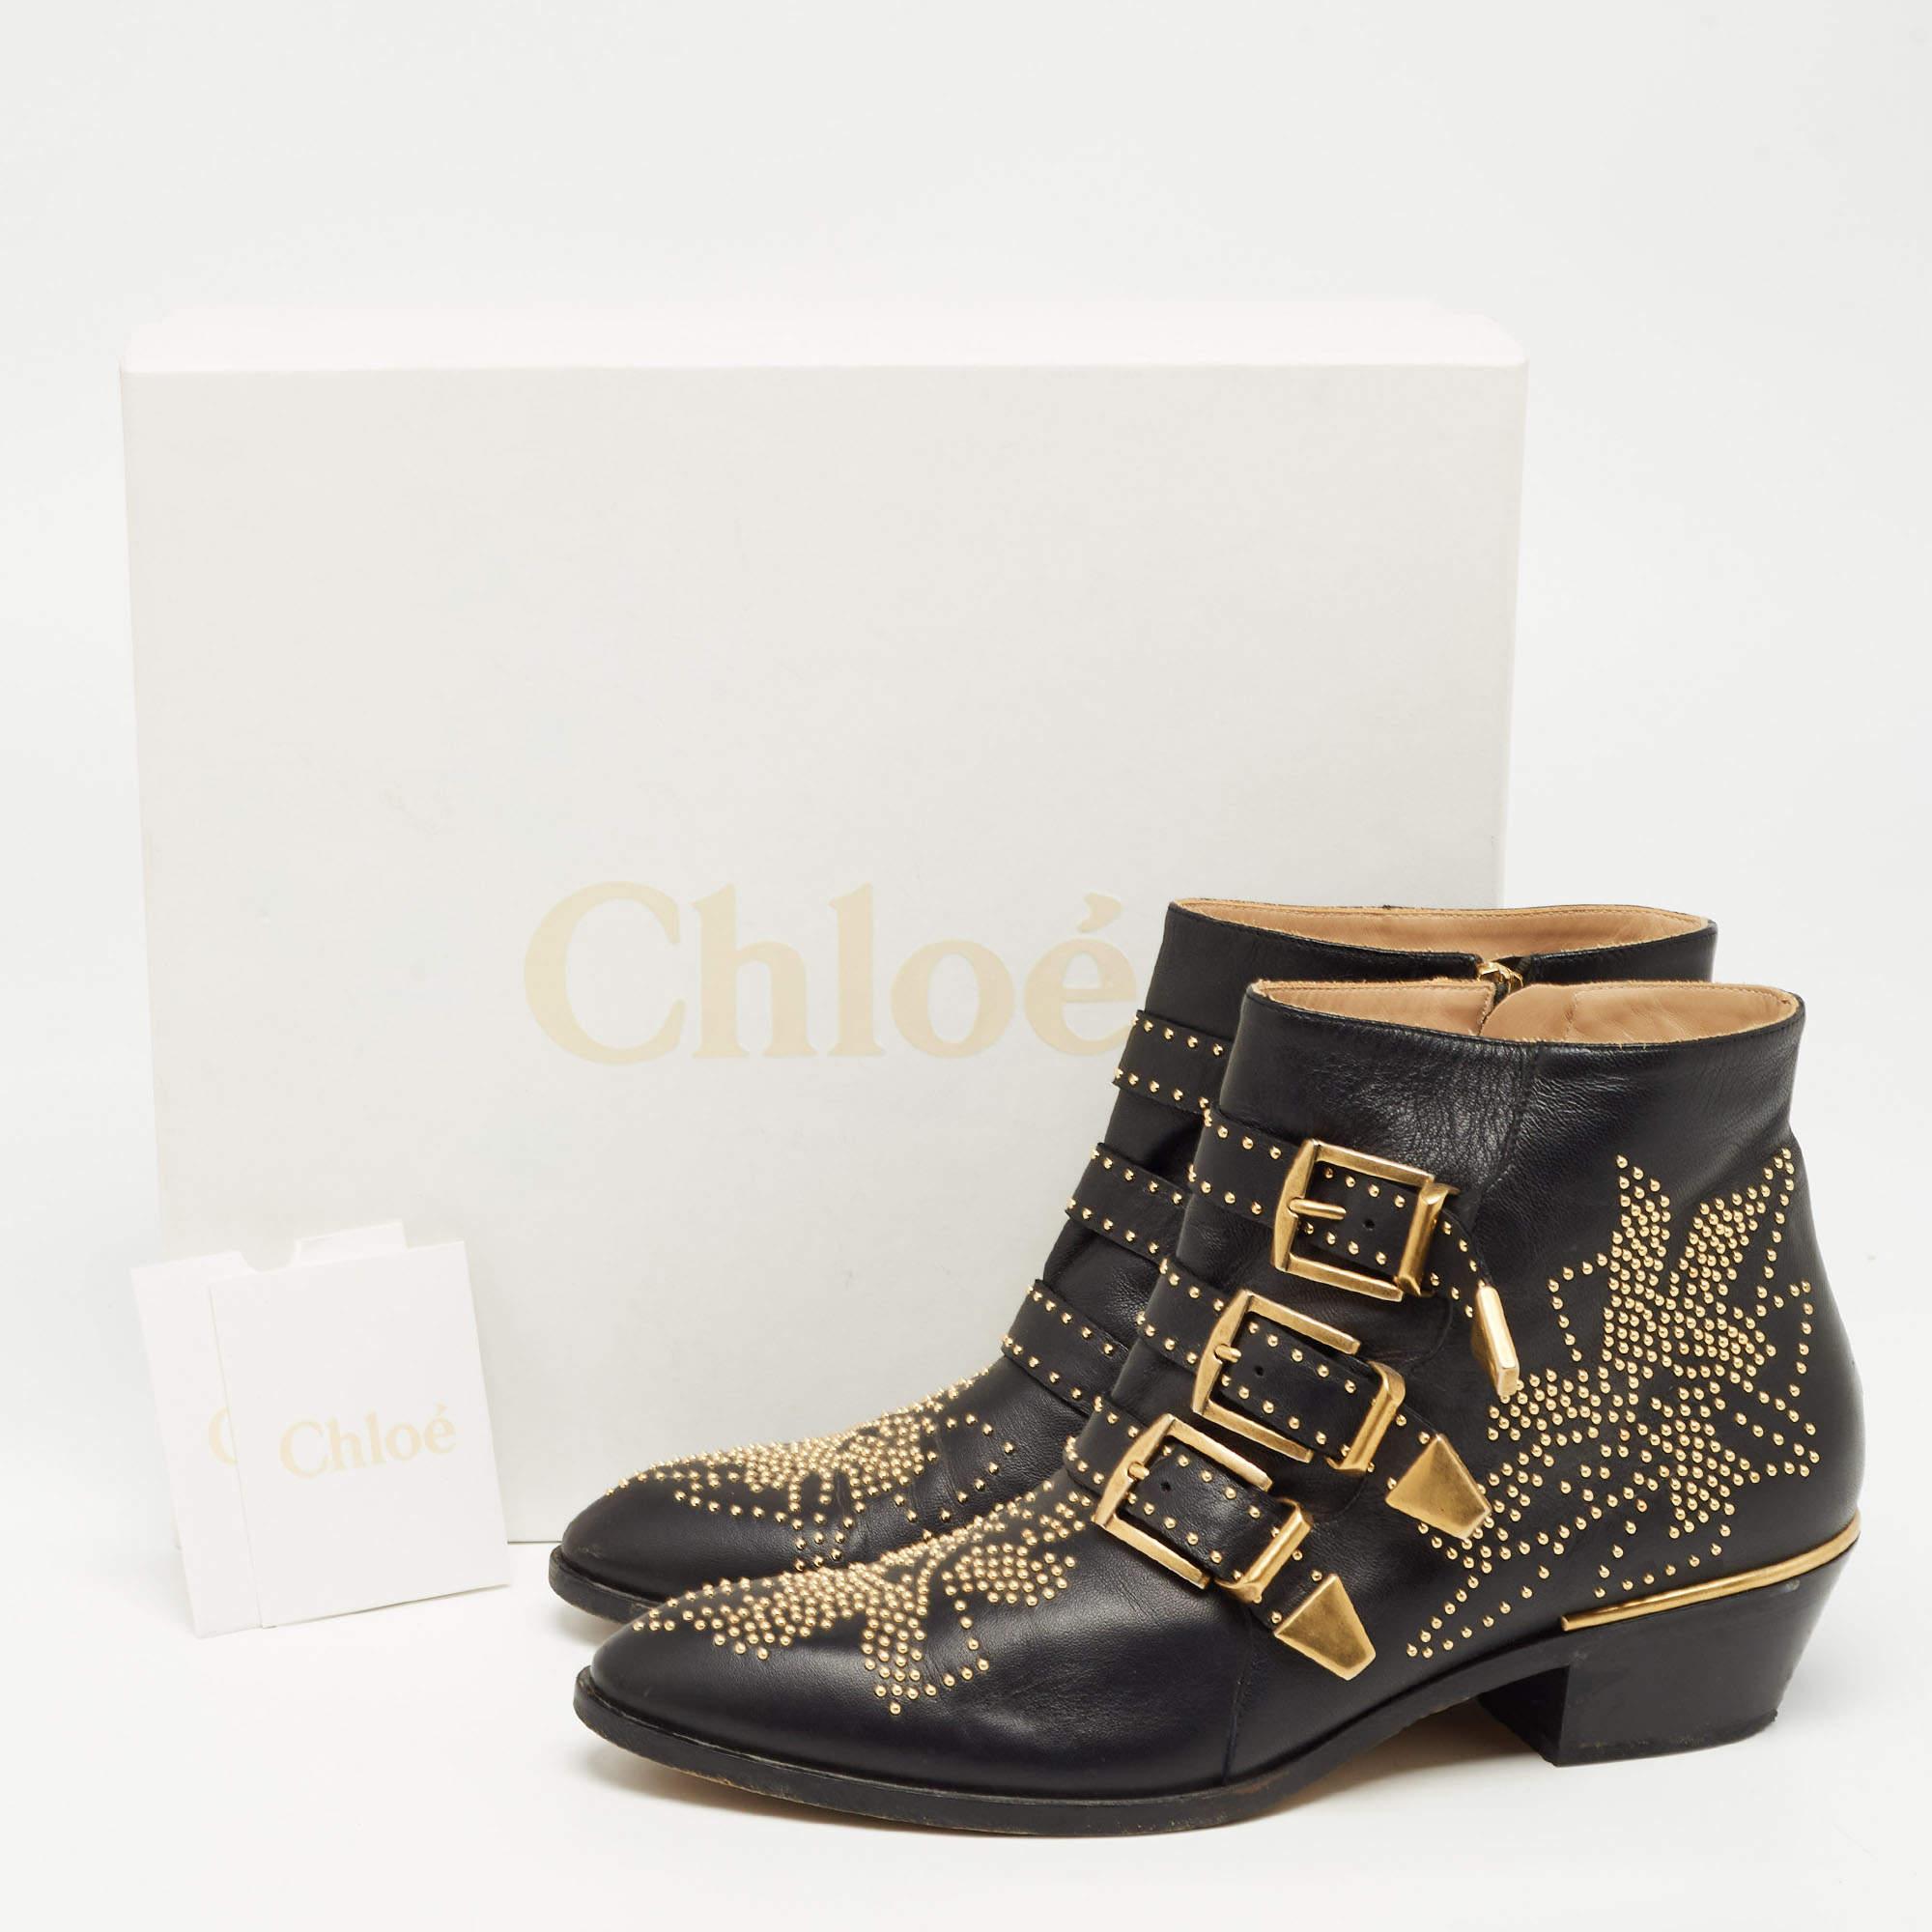 Chloe Black Leather Susanna Ankle Boots Size 39.5 5